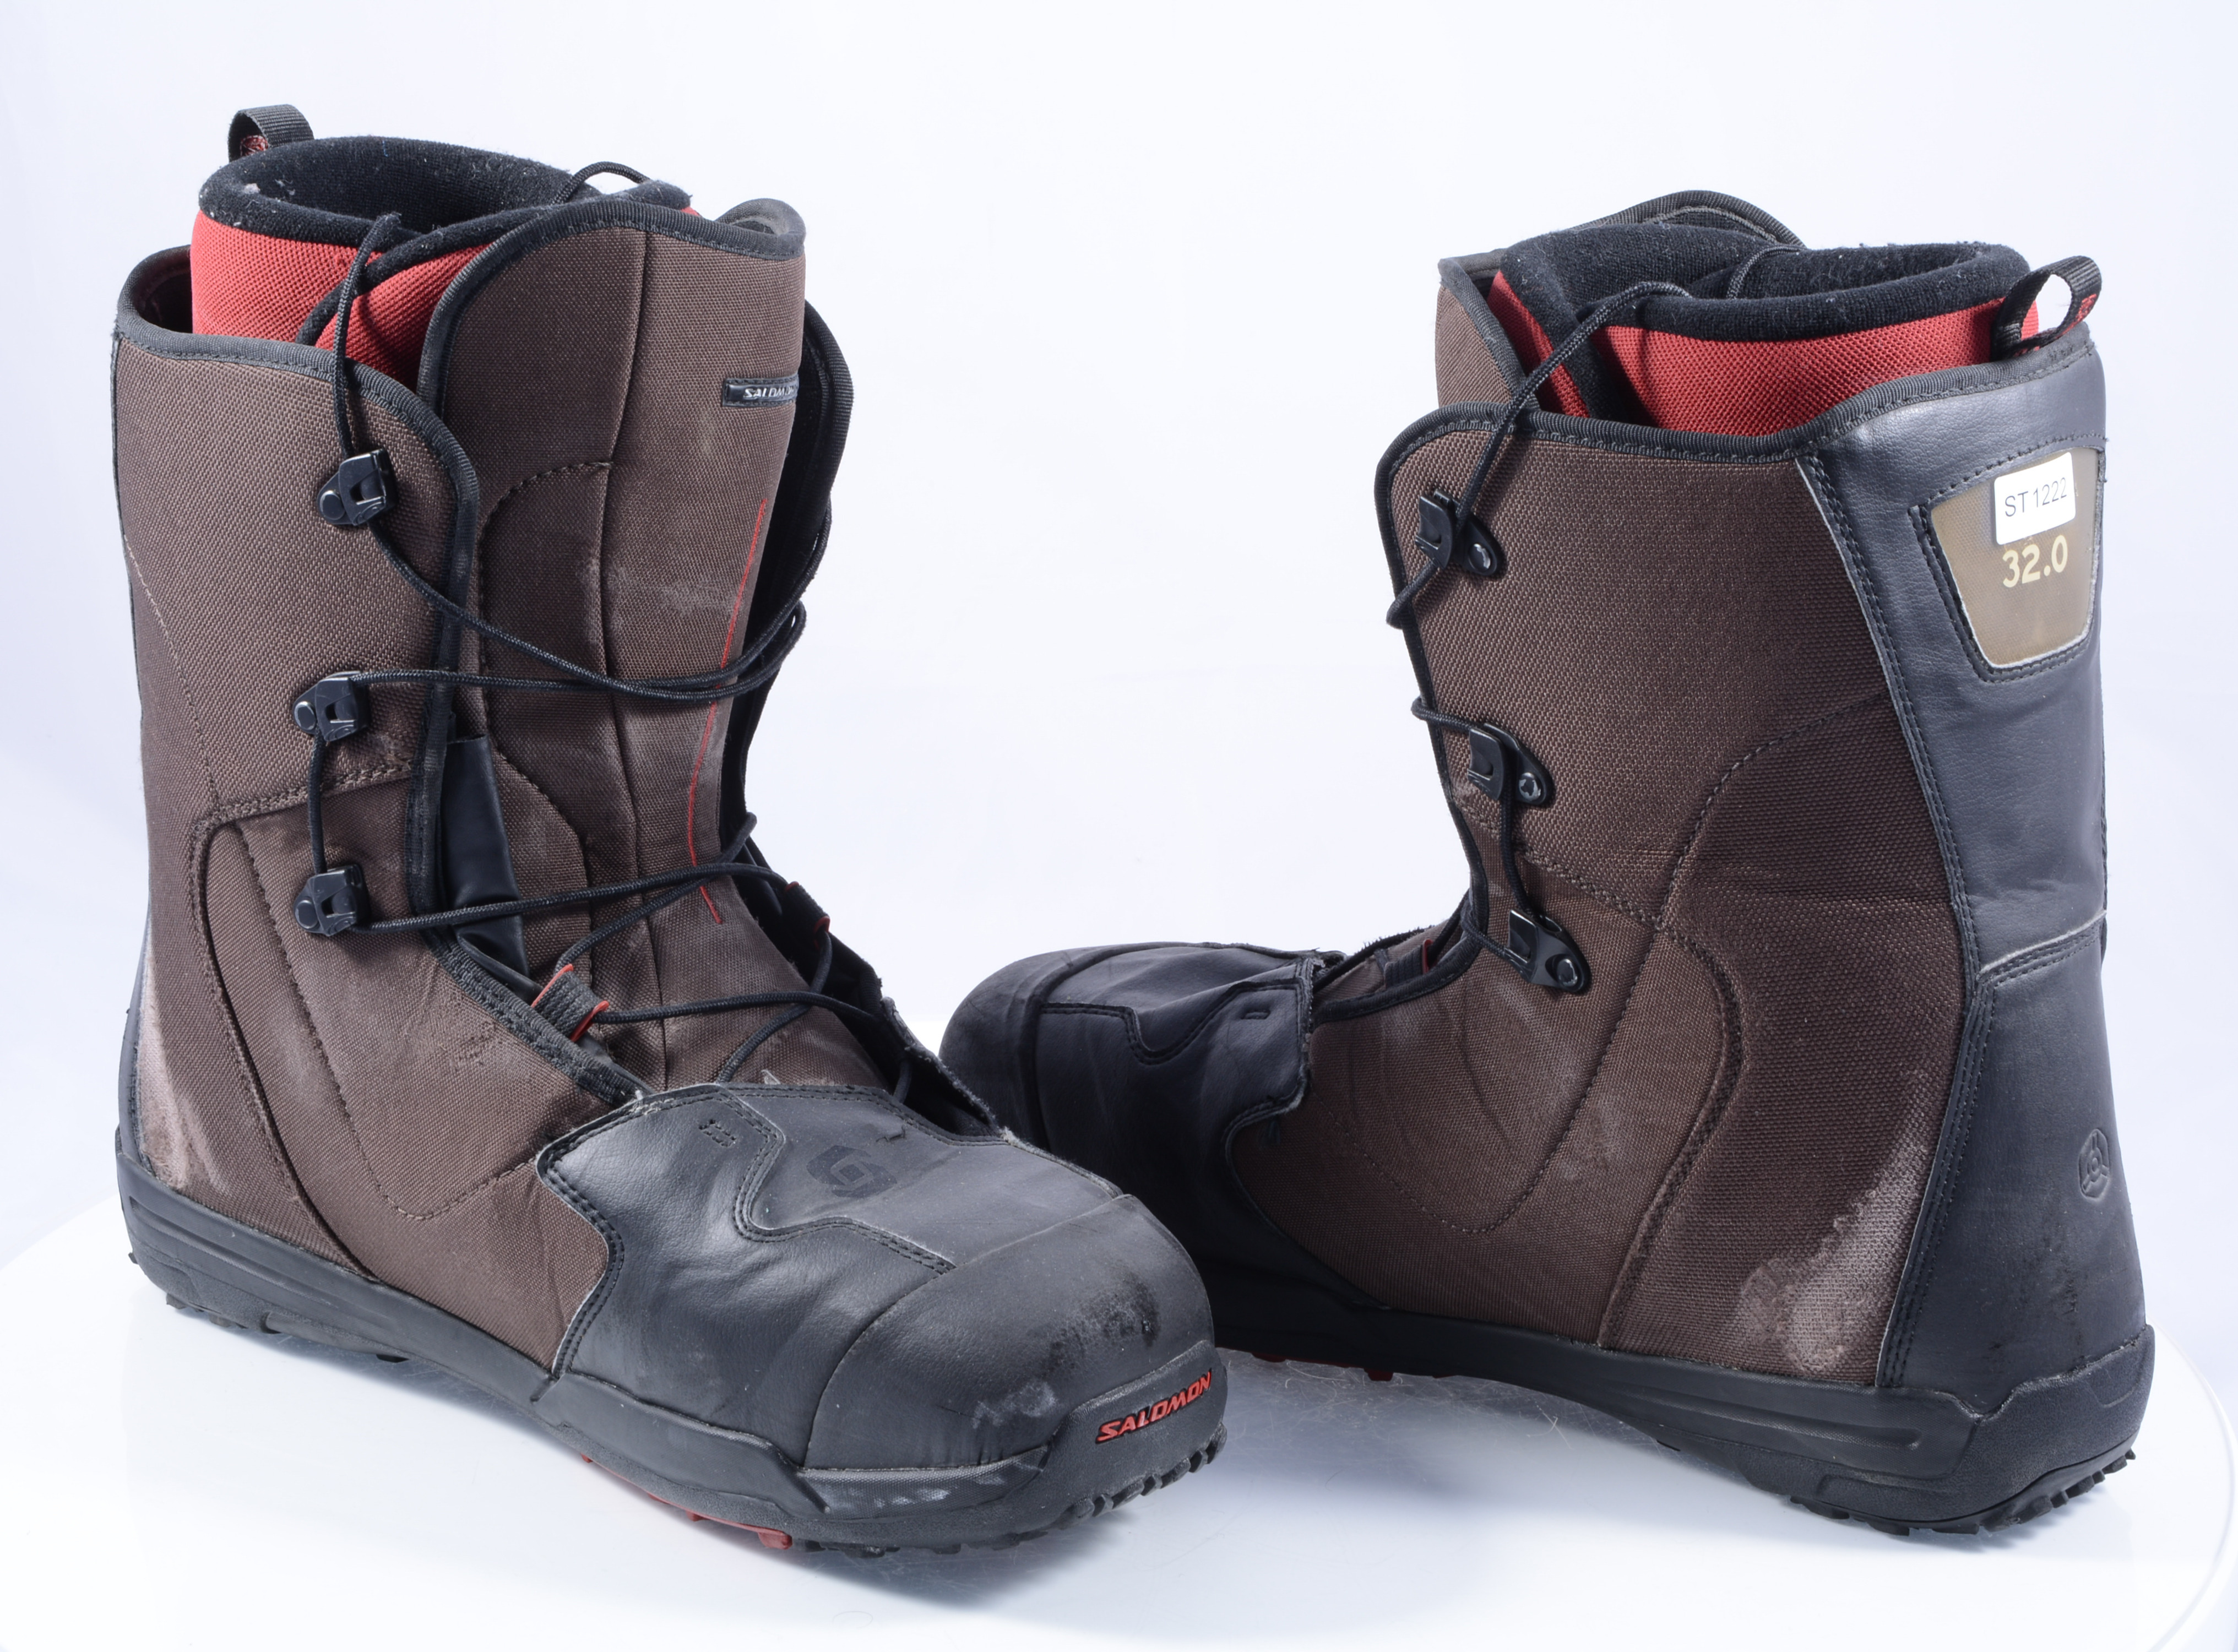 boots SALOMON KAMOOKS, THERMIC FIT, - Mardosport.com